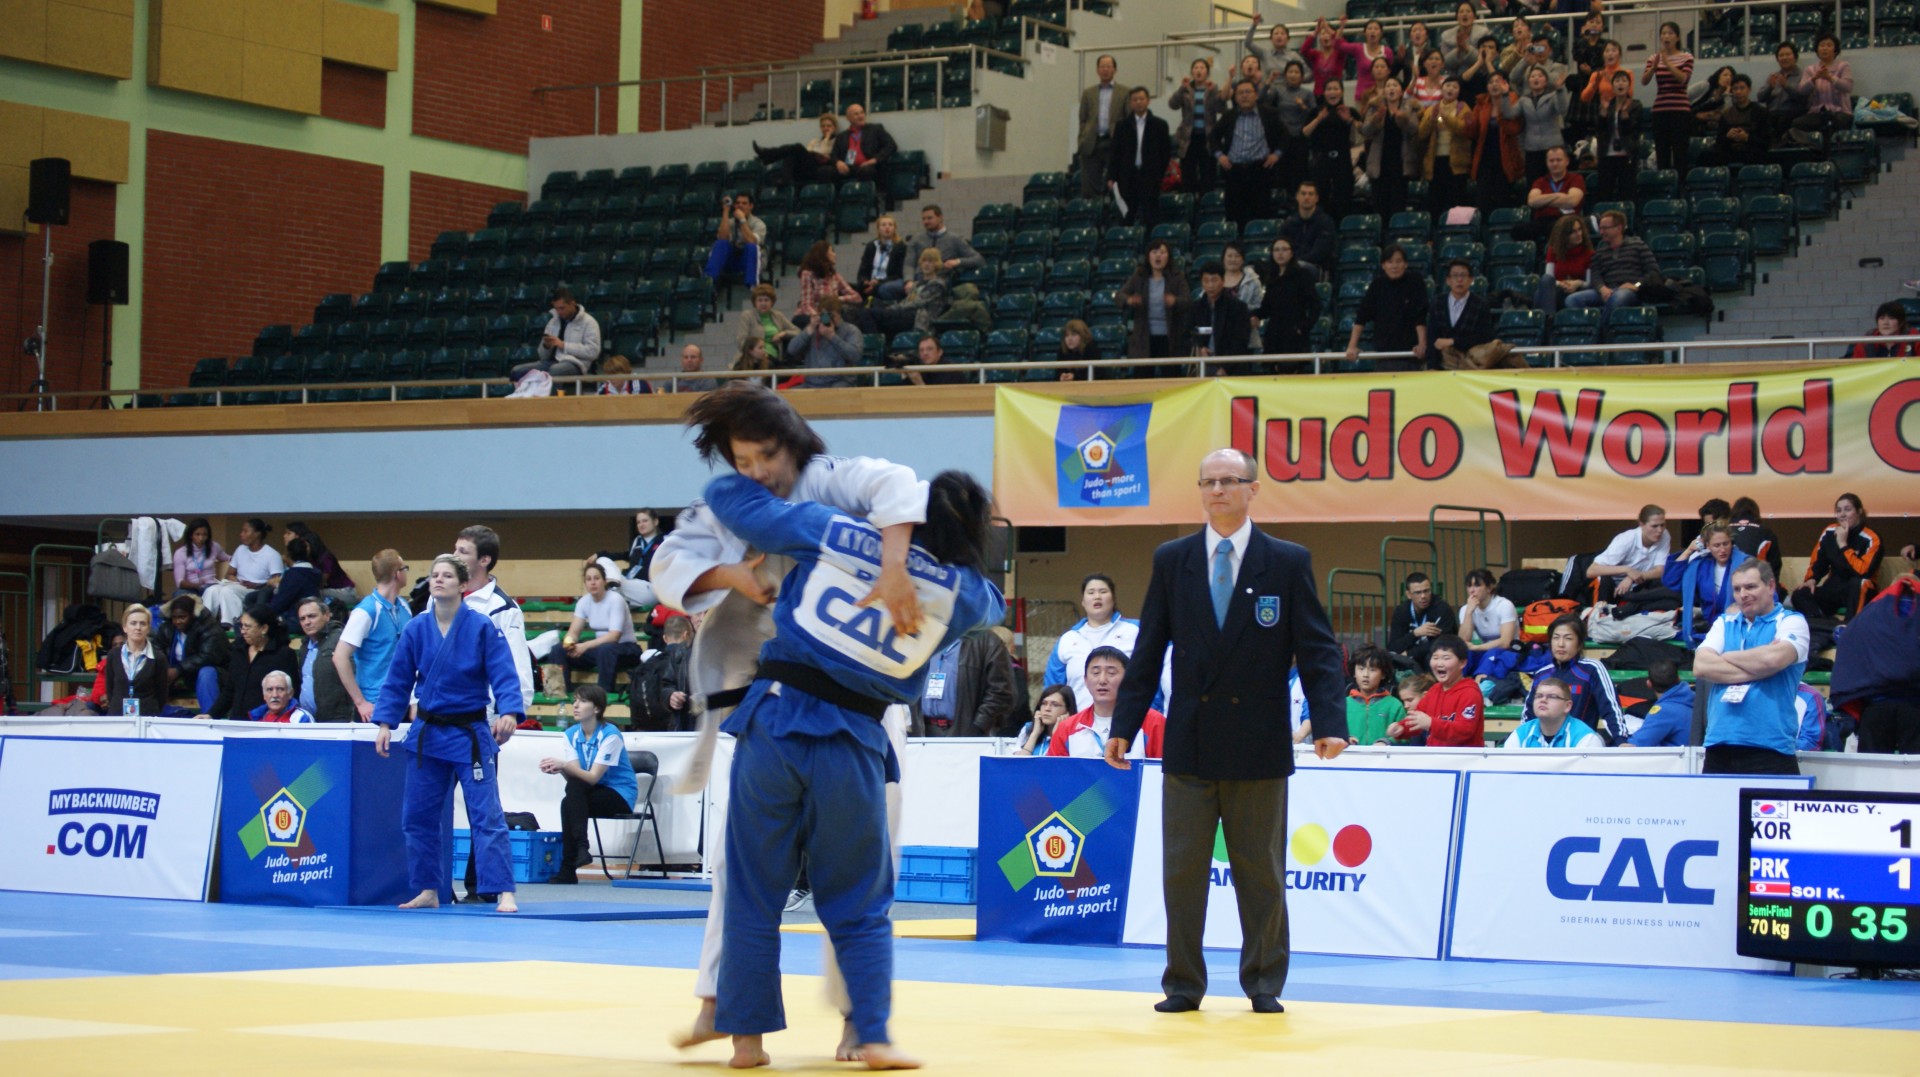 Puchar Swiata Judo Warszawa 2012 (828).JPG